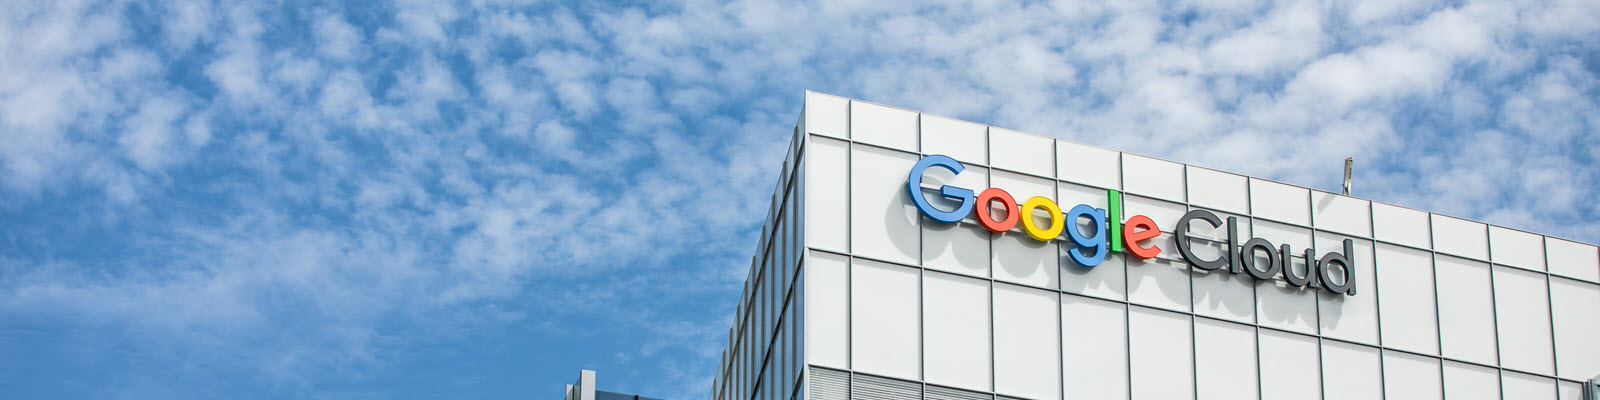 Google Cloud building